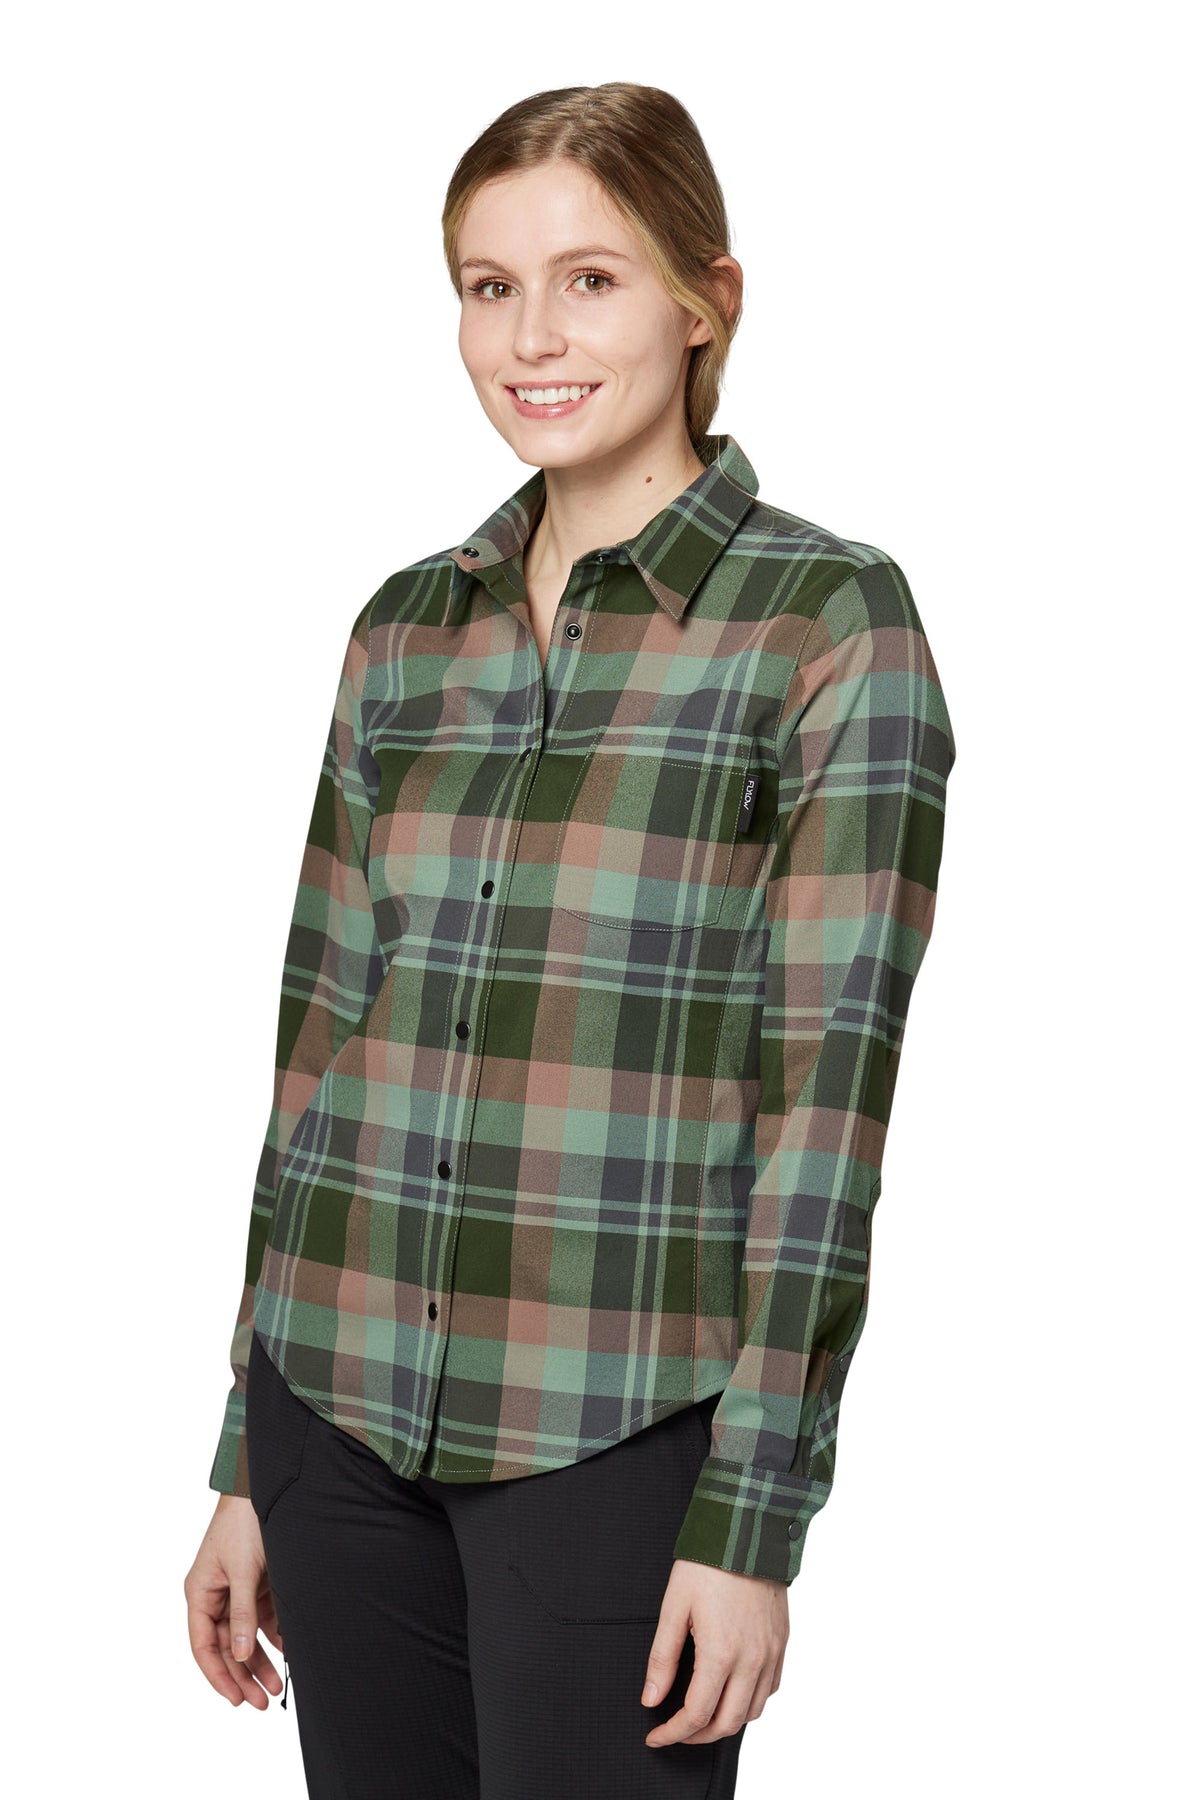 womens flannel shirt